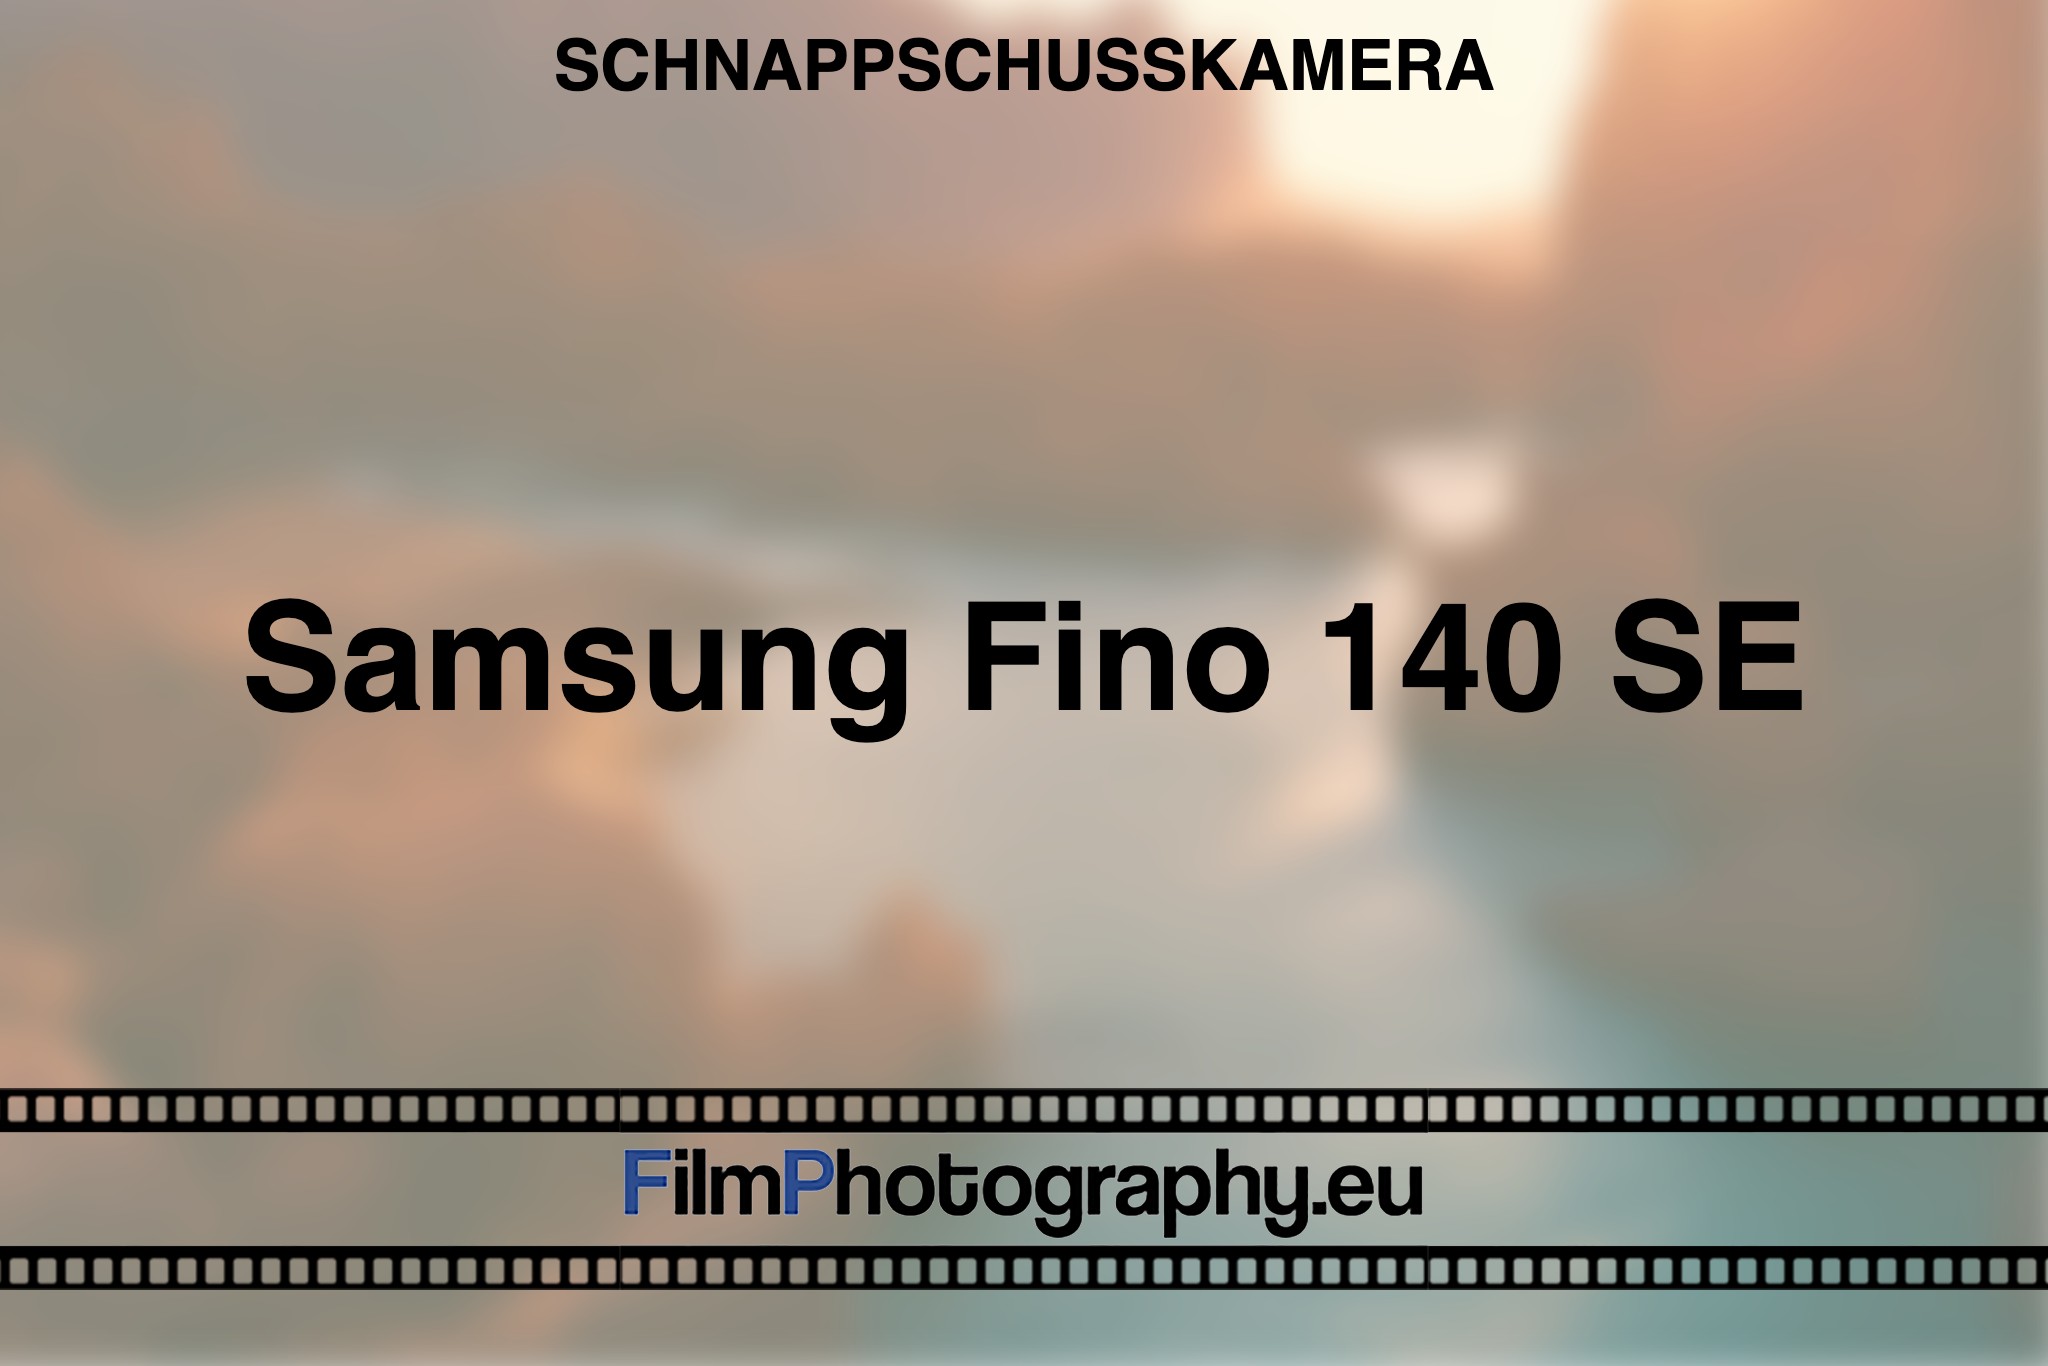 samsung-fino-140-se-schnappschusskamera-bnv